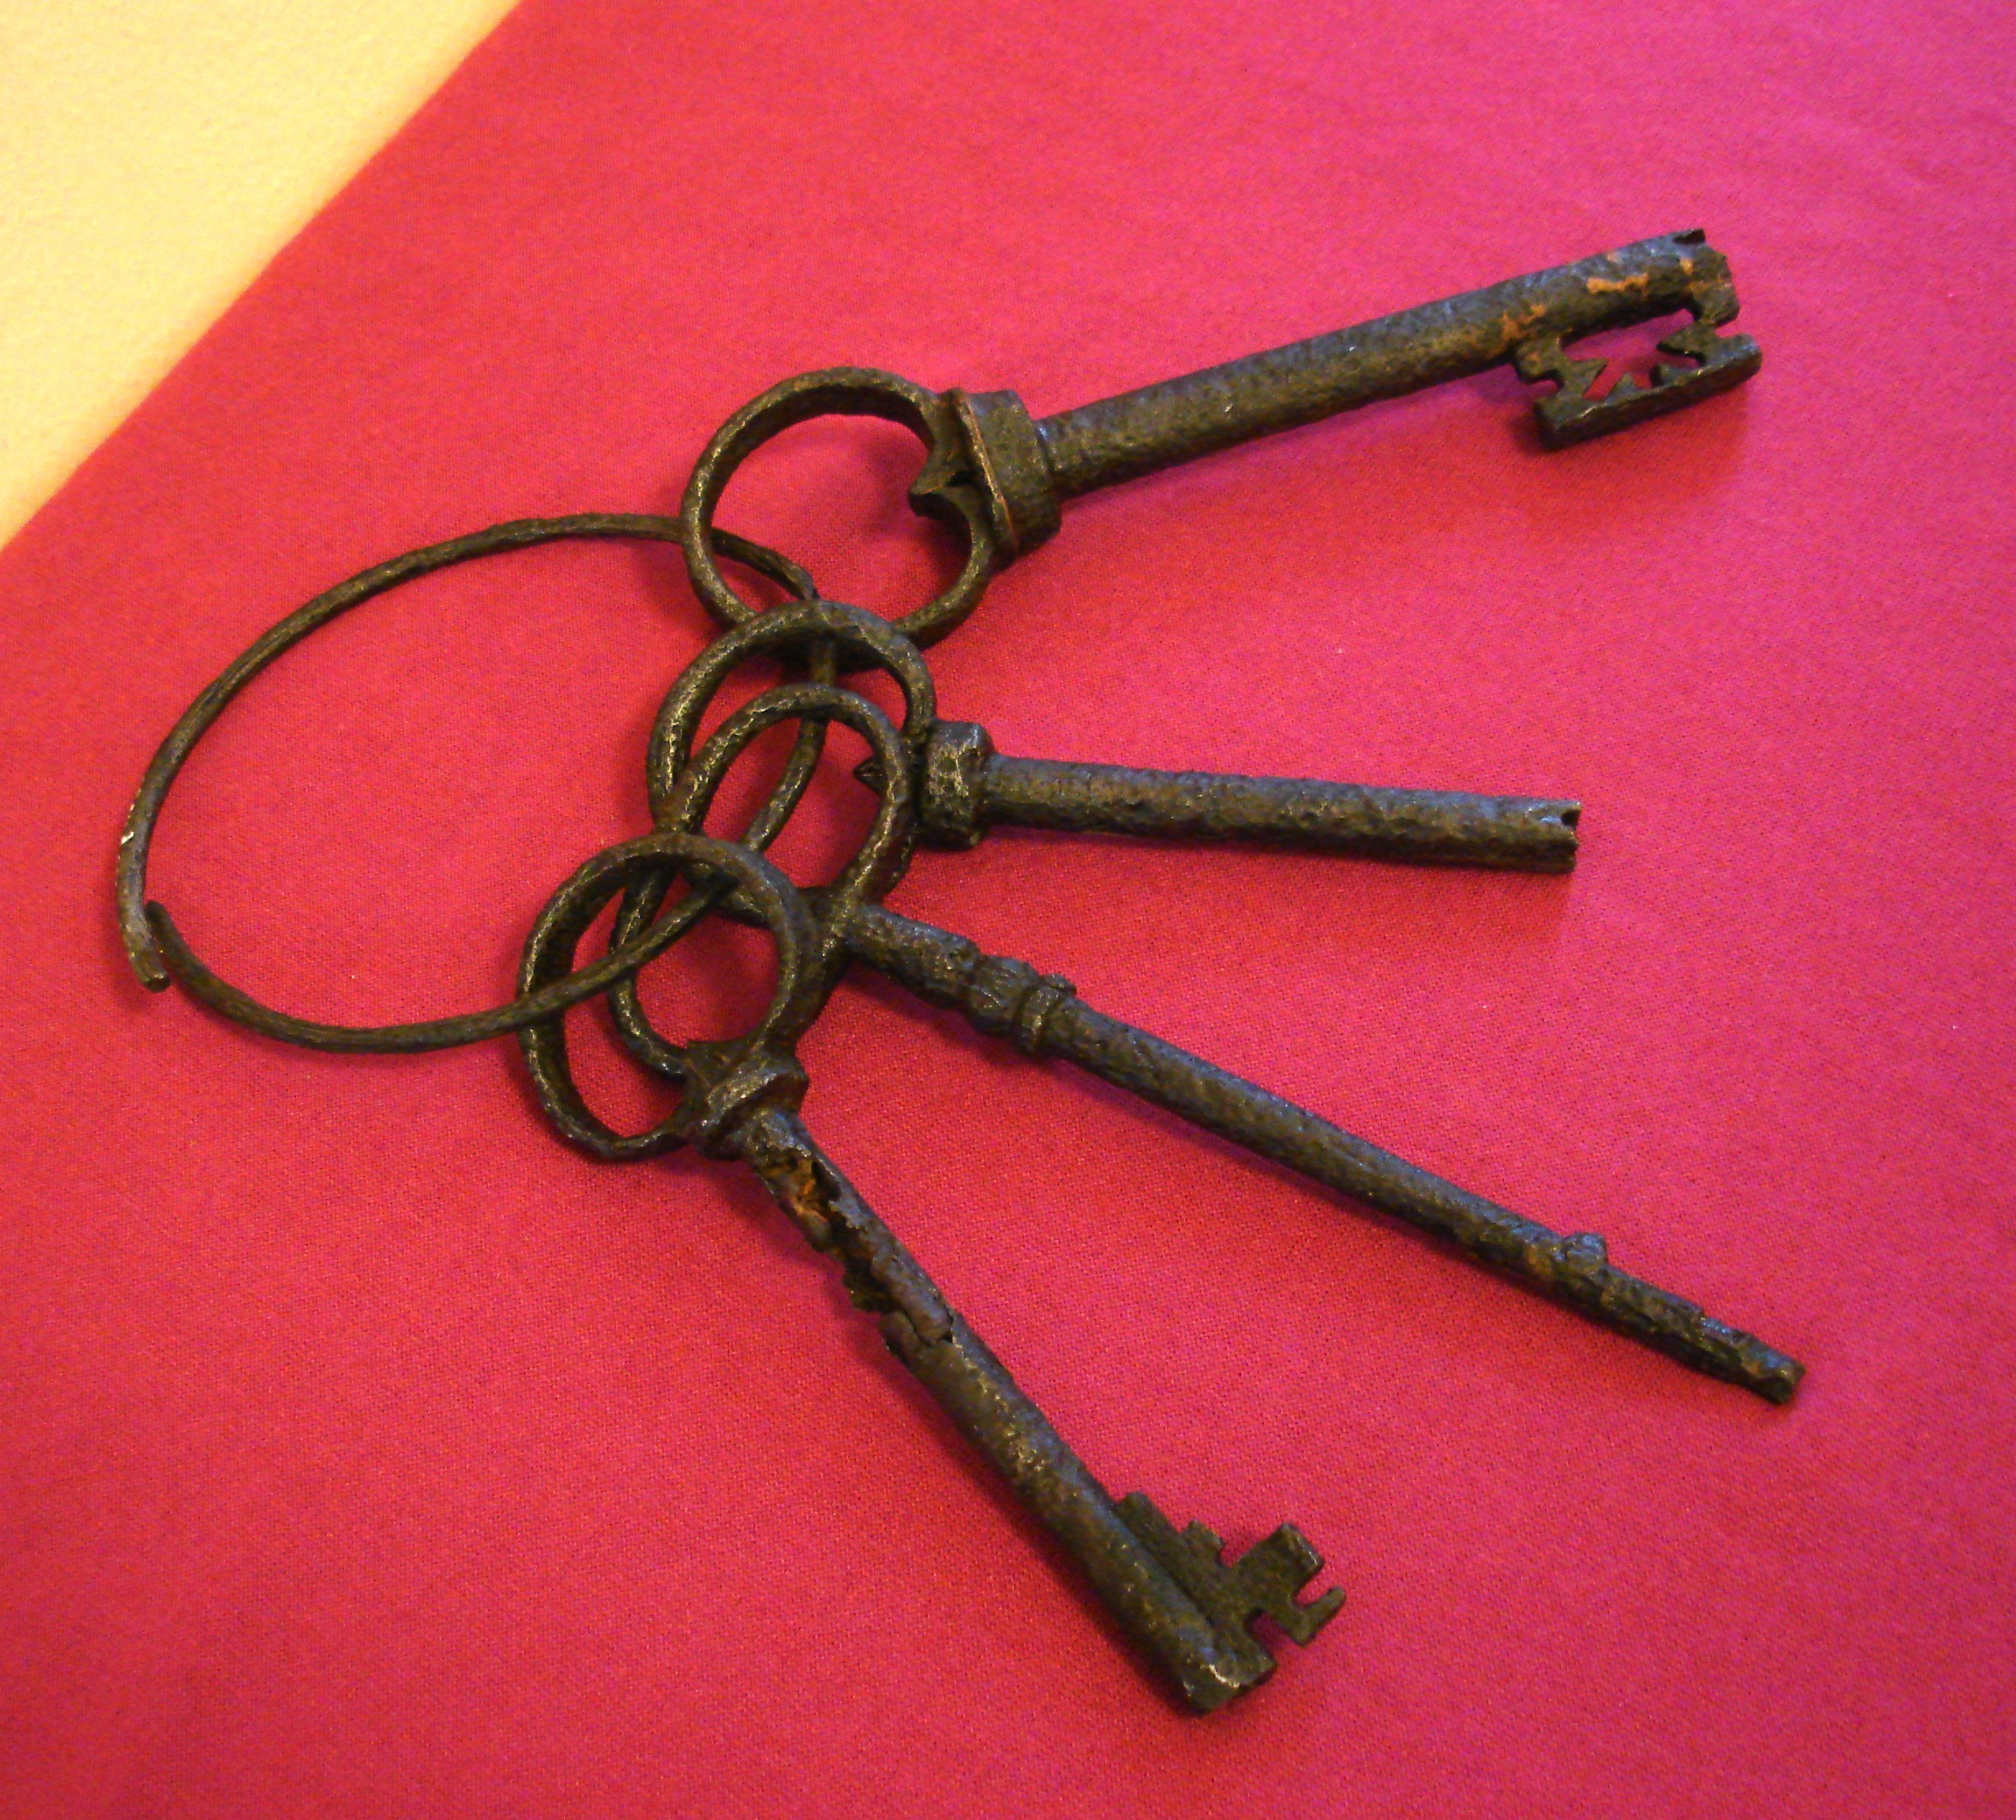 Schlüsselbund mit 4 Schlüsseln aus Eisen; Ruine Kloster Limburg; Mittelalter (Stadtmuseum Bad Dürkheim, Museumsgesellschaft Bad Dürkheim e.V. CC BY-NC-SA)